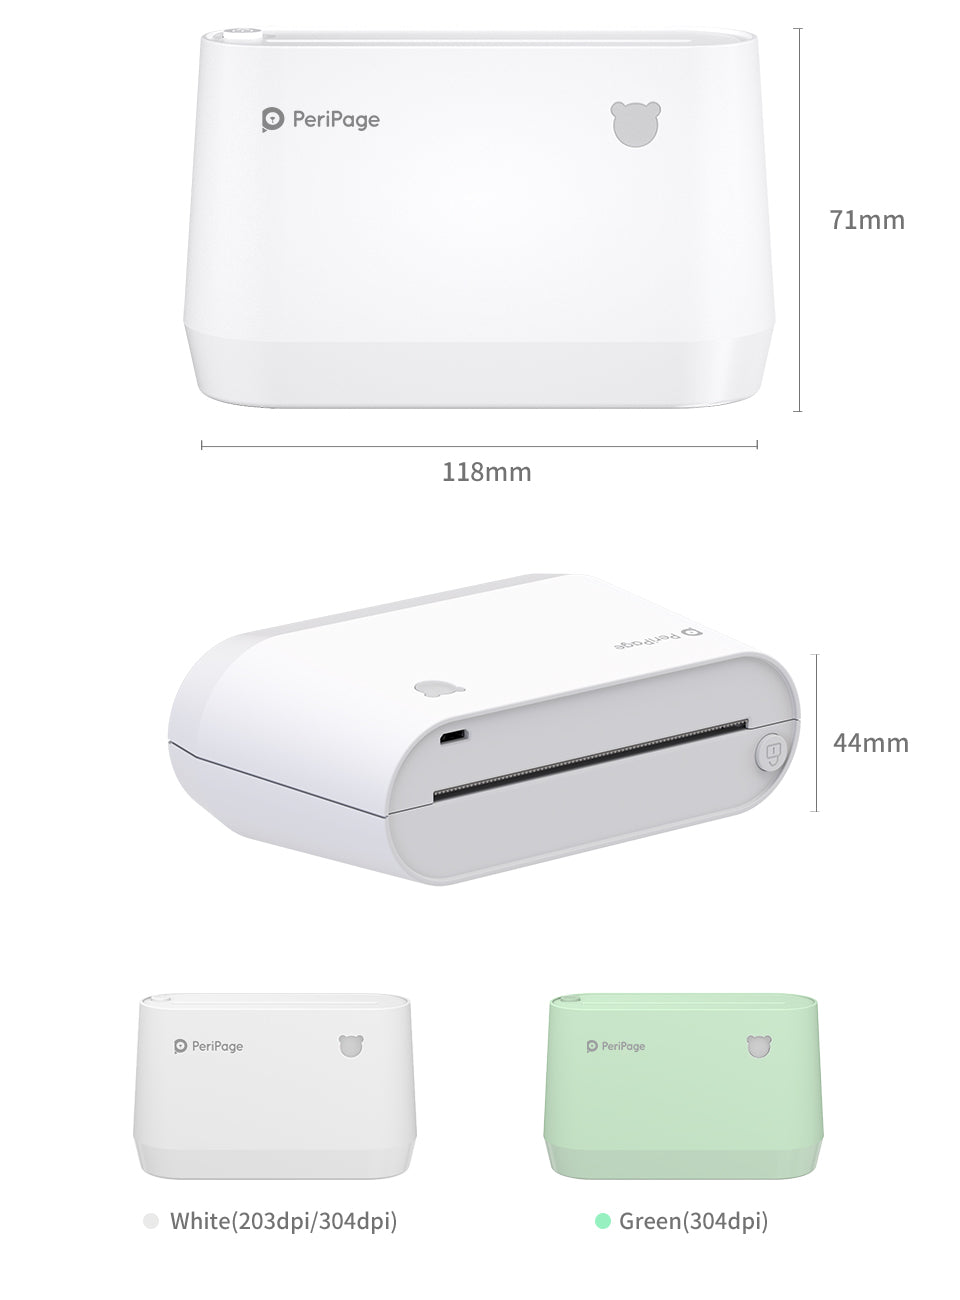 PeriPage A9 Mini Printer White